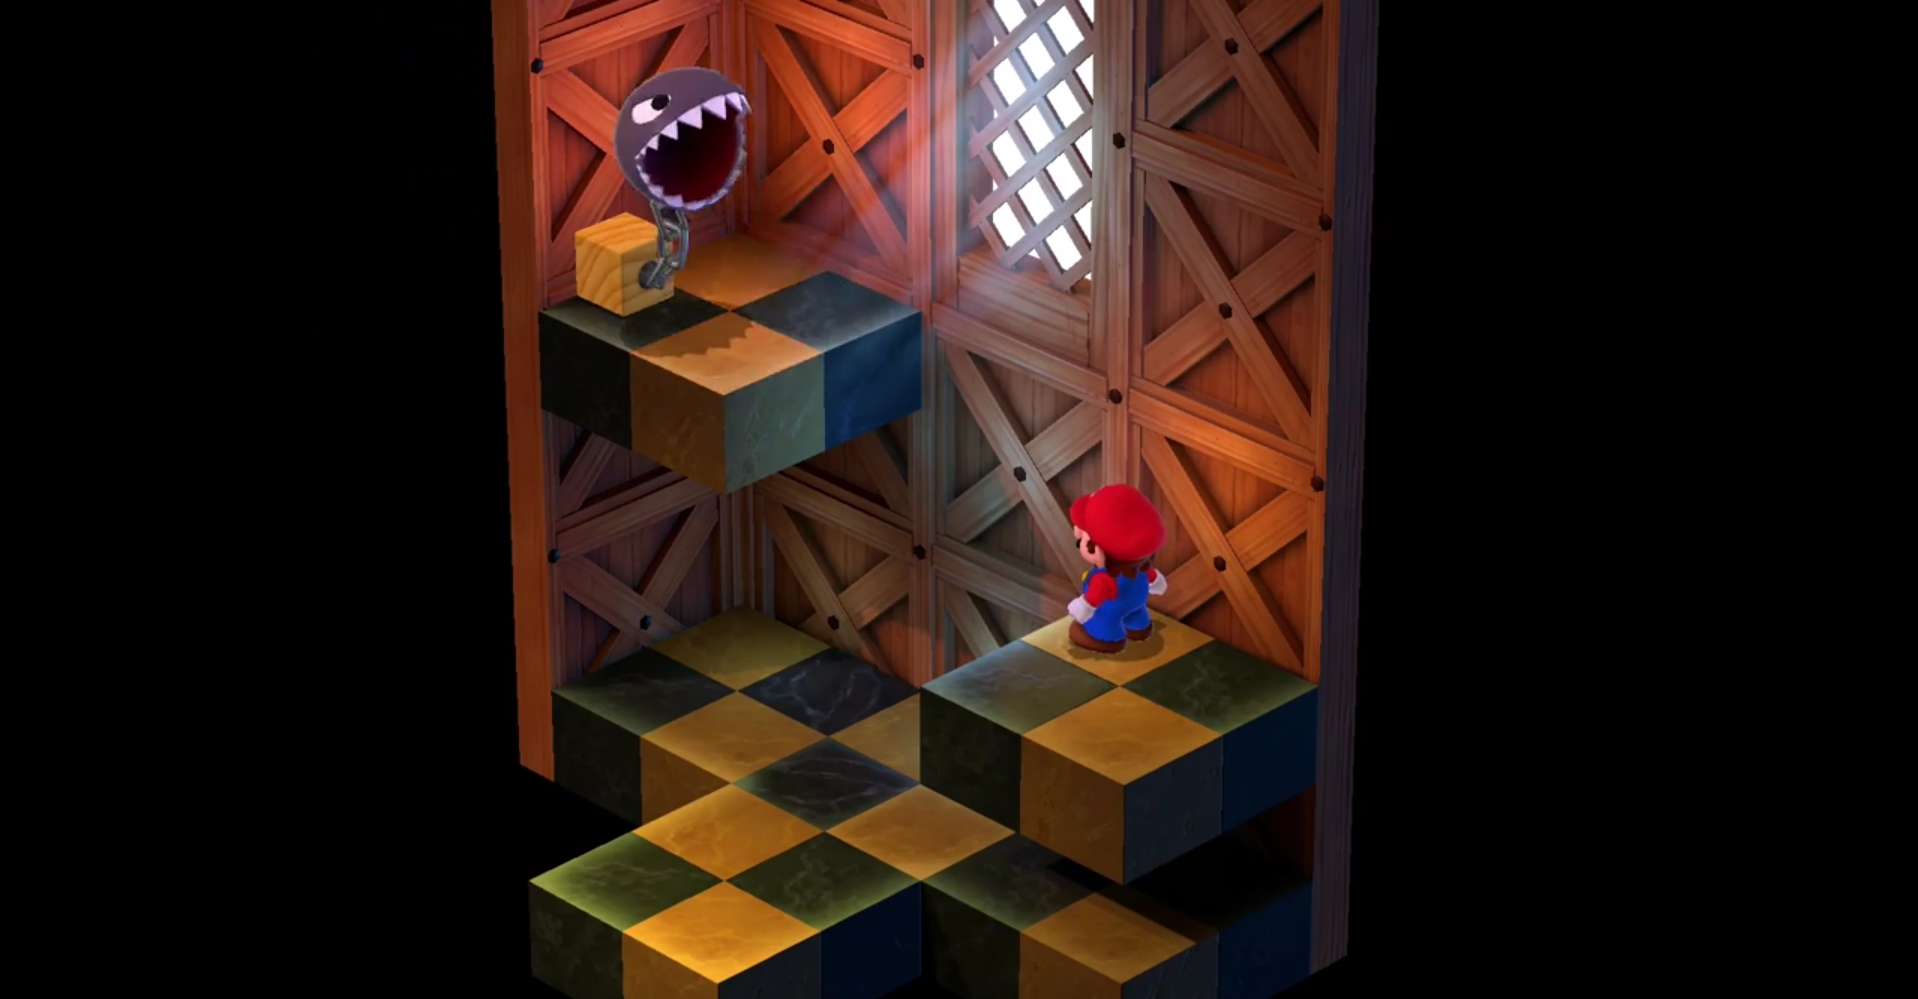 Mario encountering a Chain Chomp in Super Mario RPG.